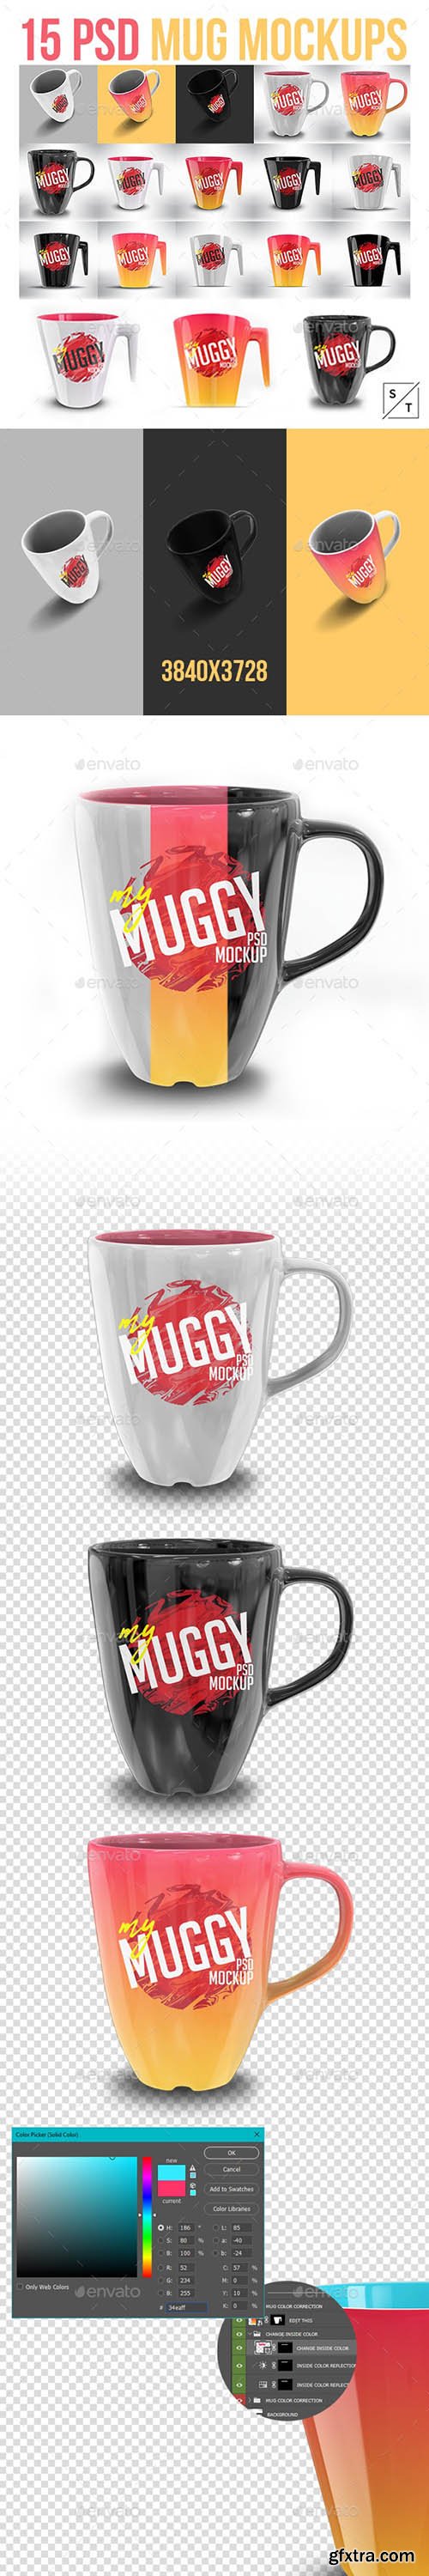 GraphicRiver - Photorealistic 15 PSD Mockup Mug Set 22658898